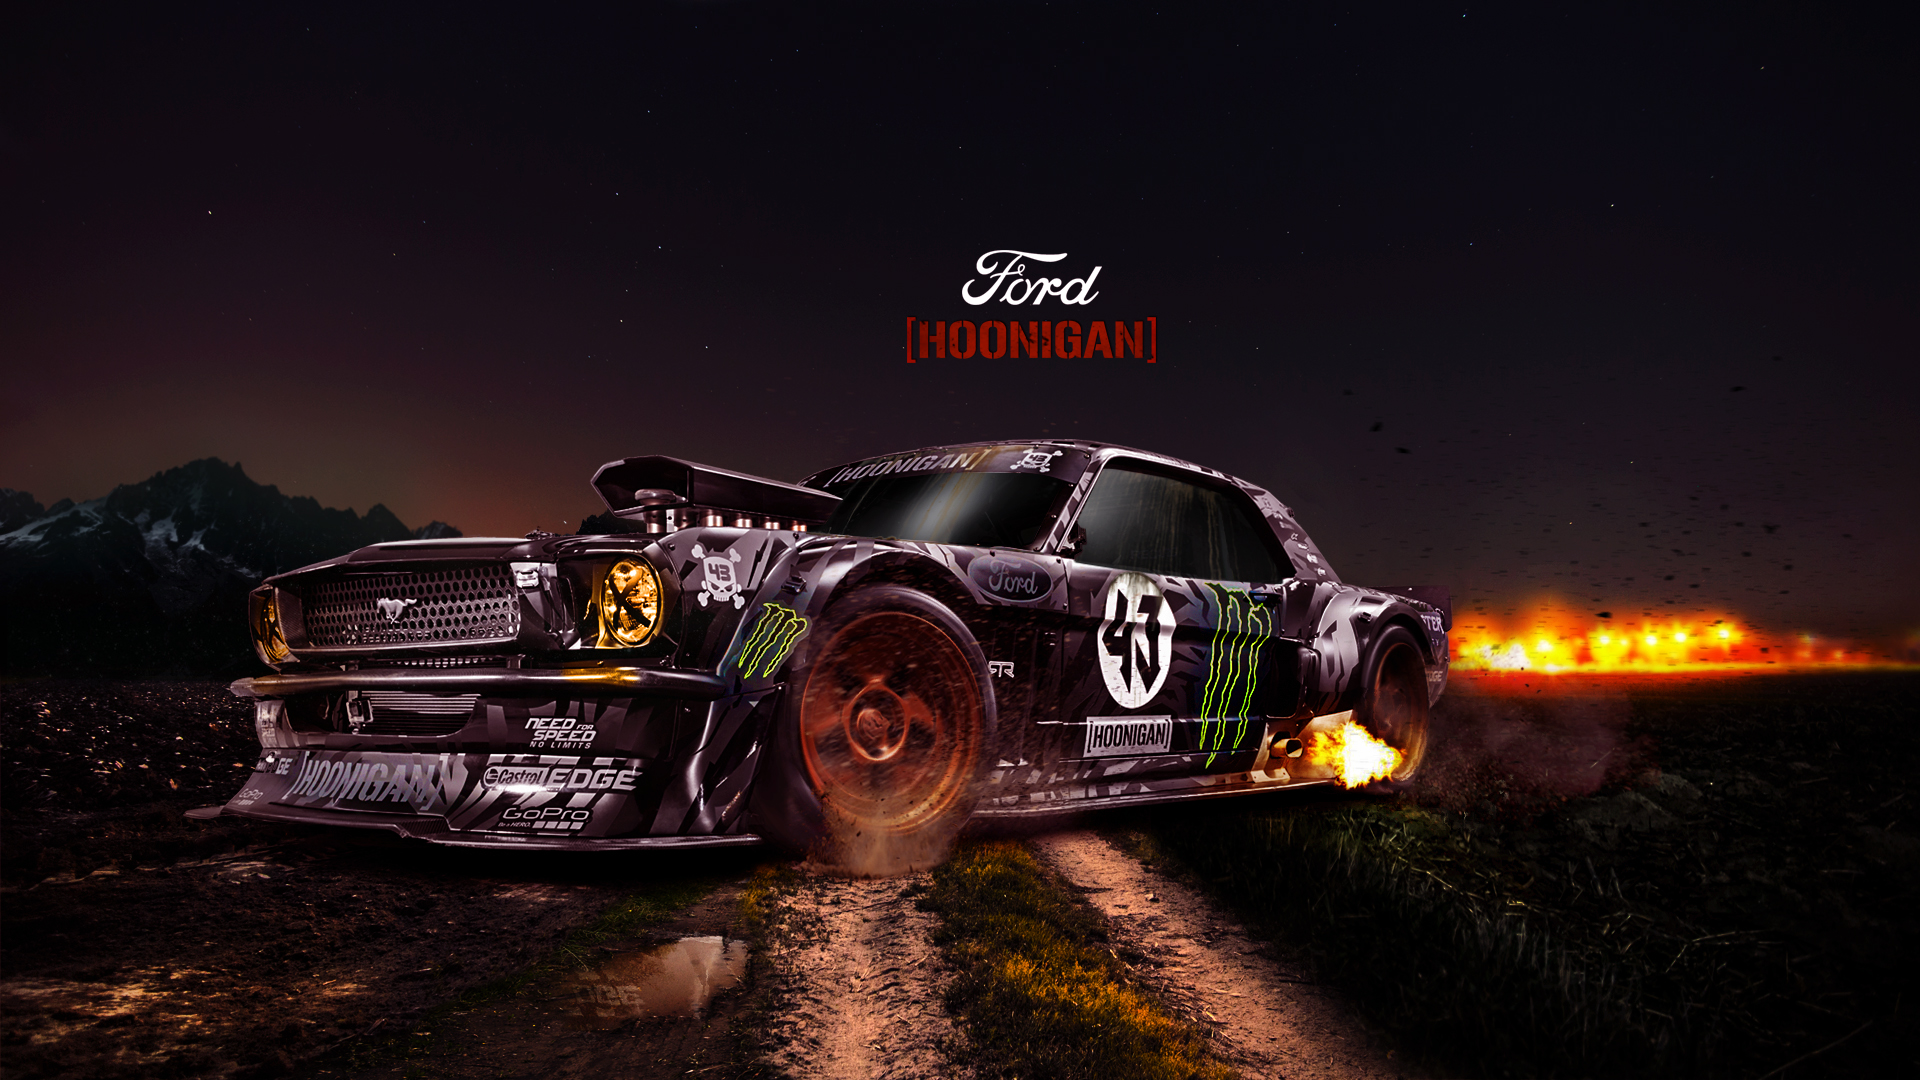 Hoonigan ford`s old car by temo4hossam on DeviantArt